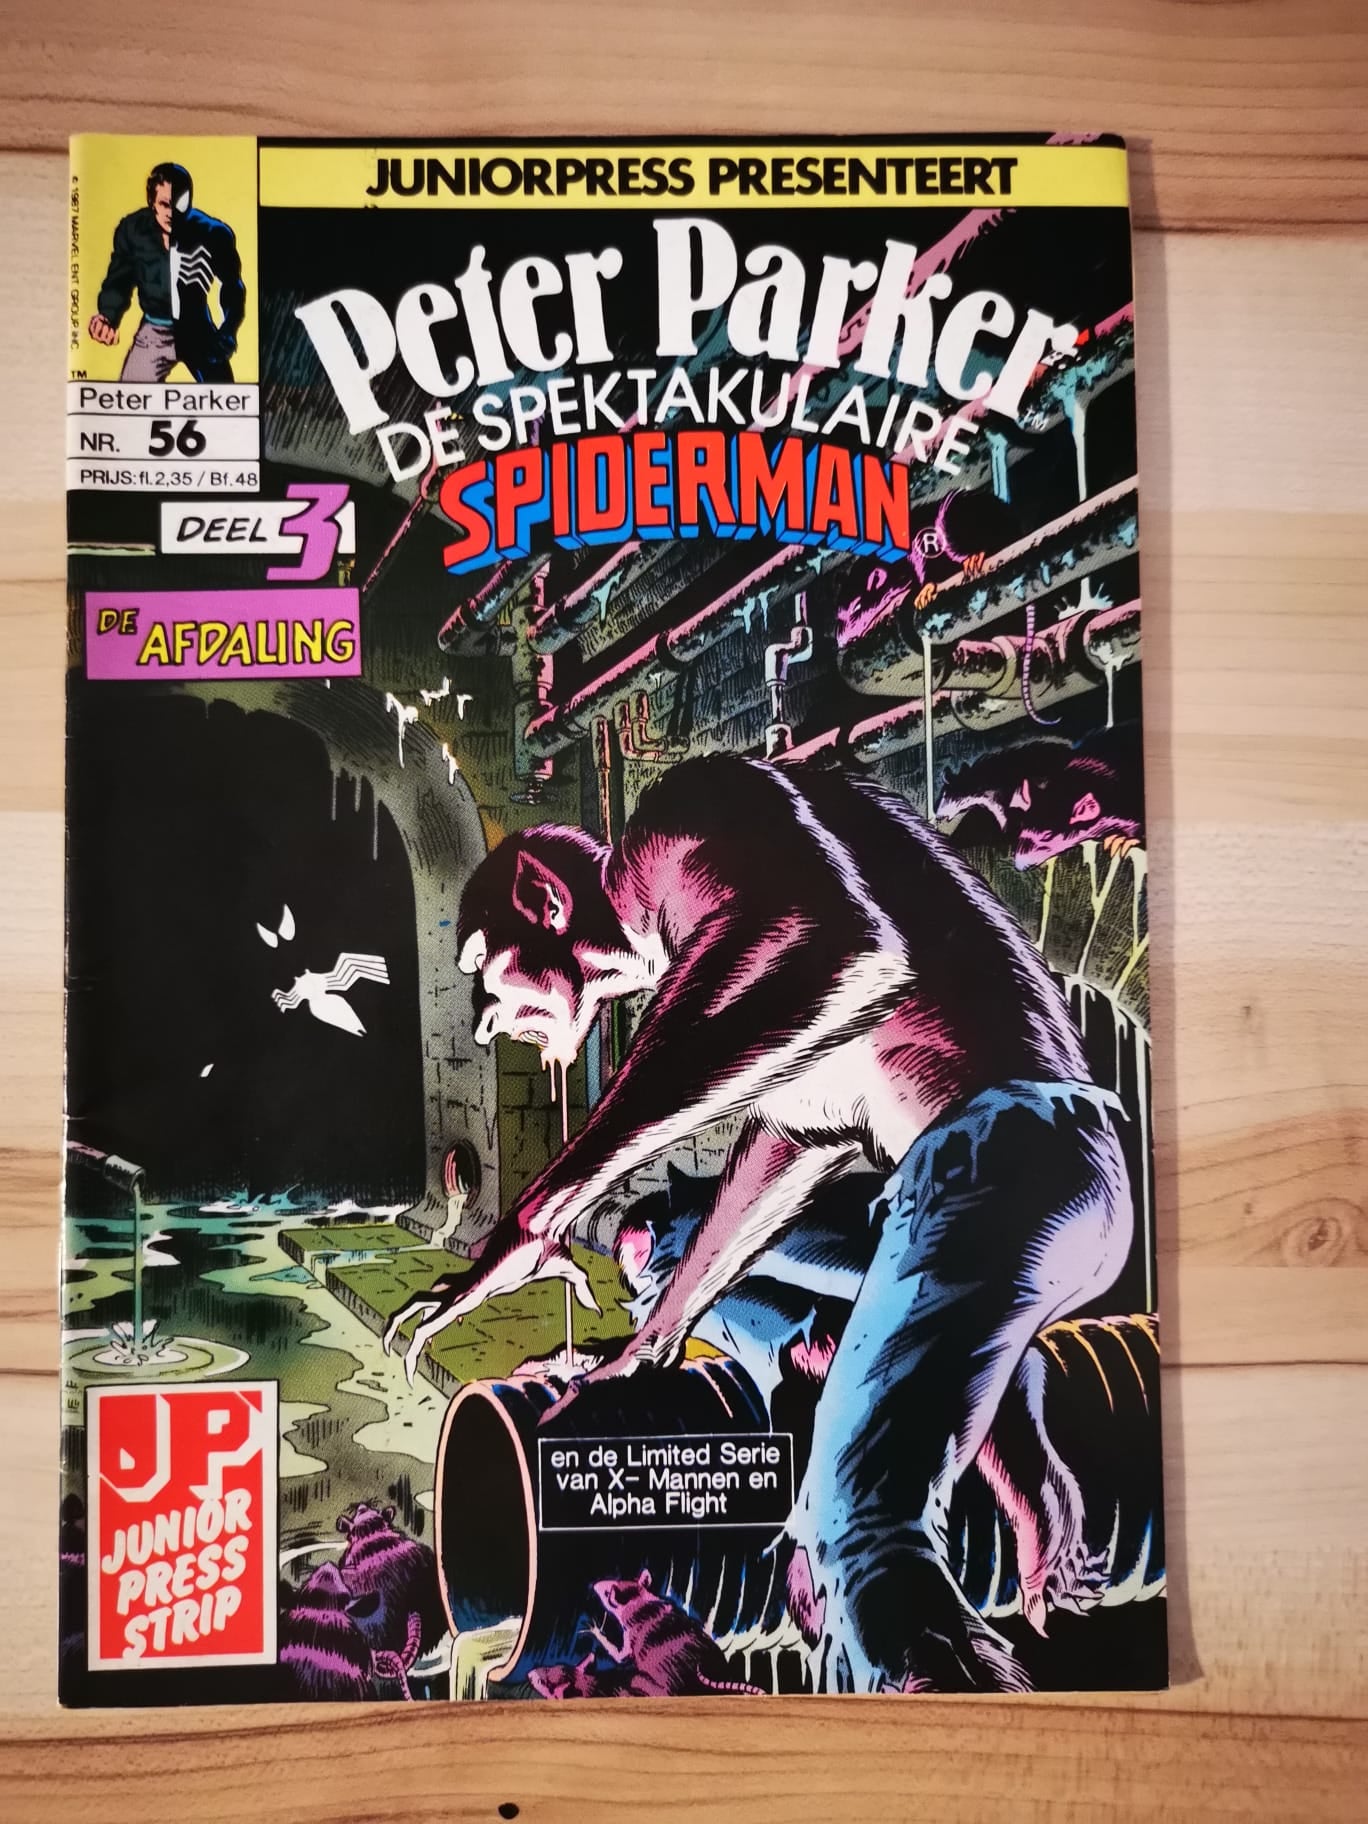 Peter Parker De spektakulaire spiderman #56